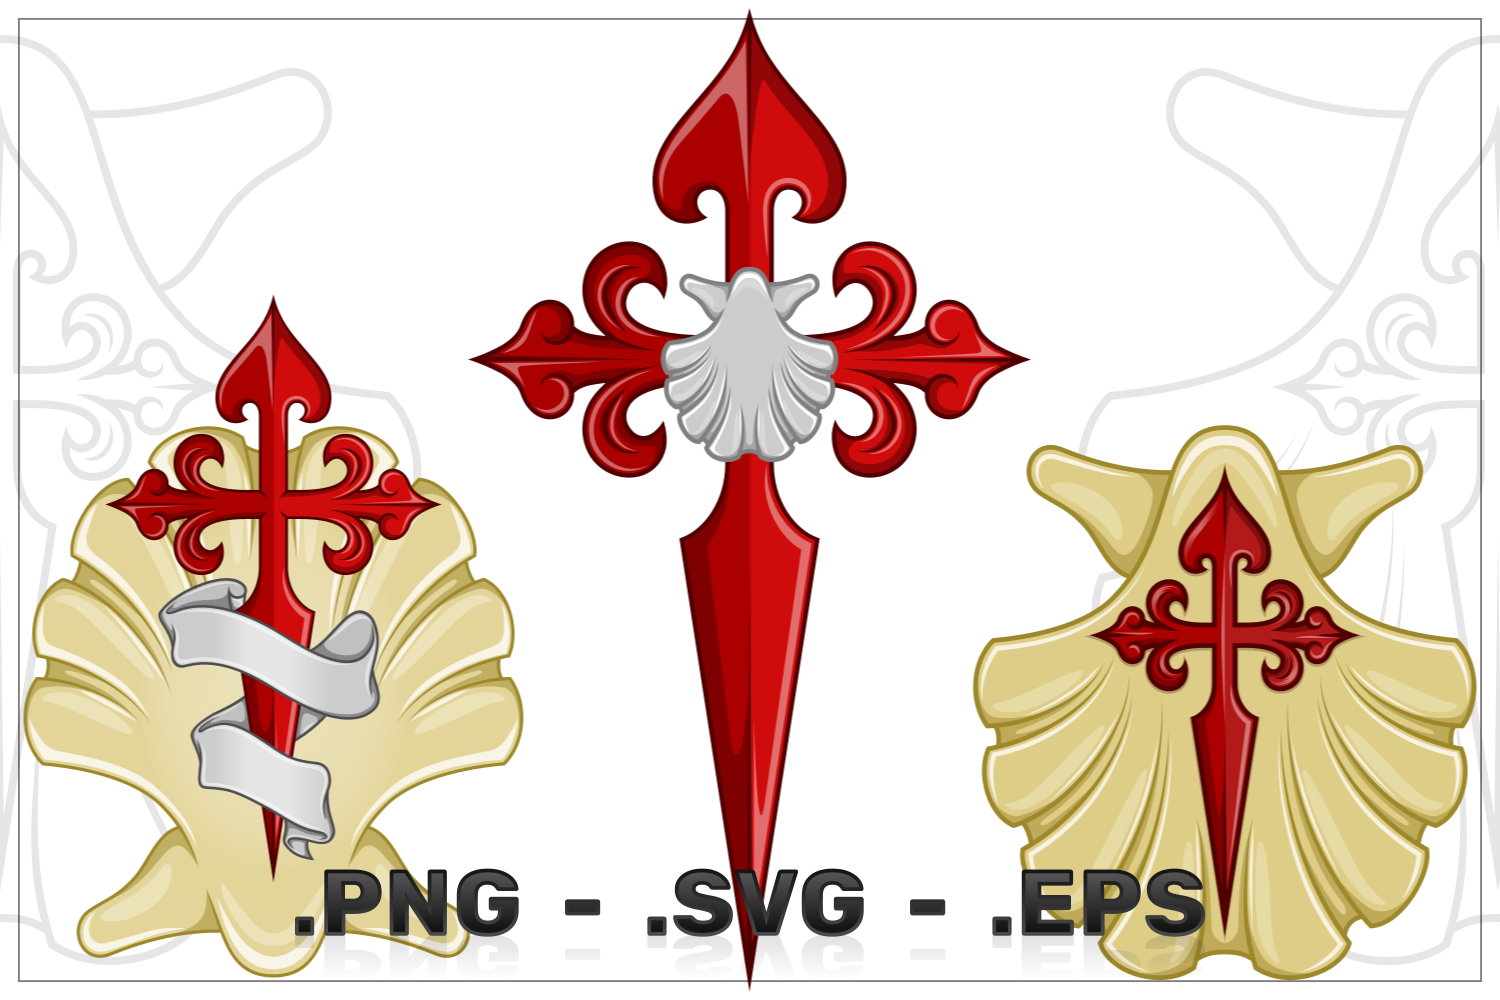 Santiago apostle symbol vector design